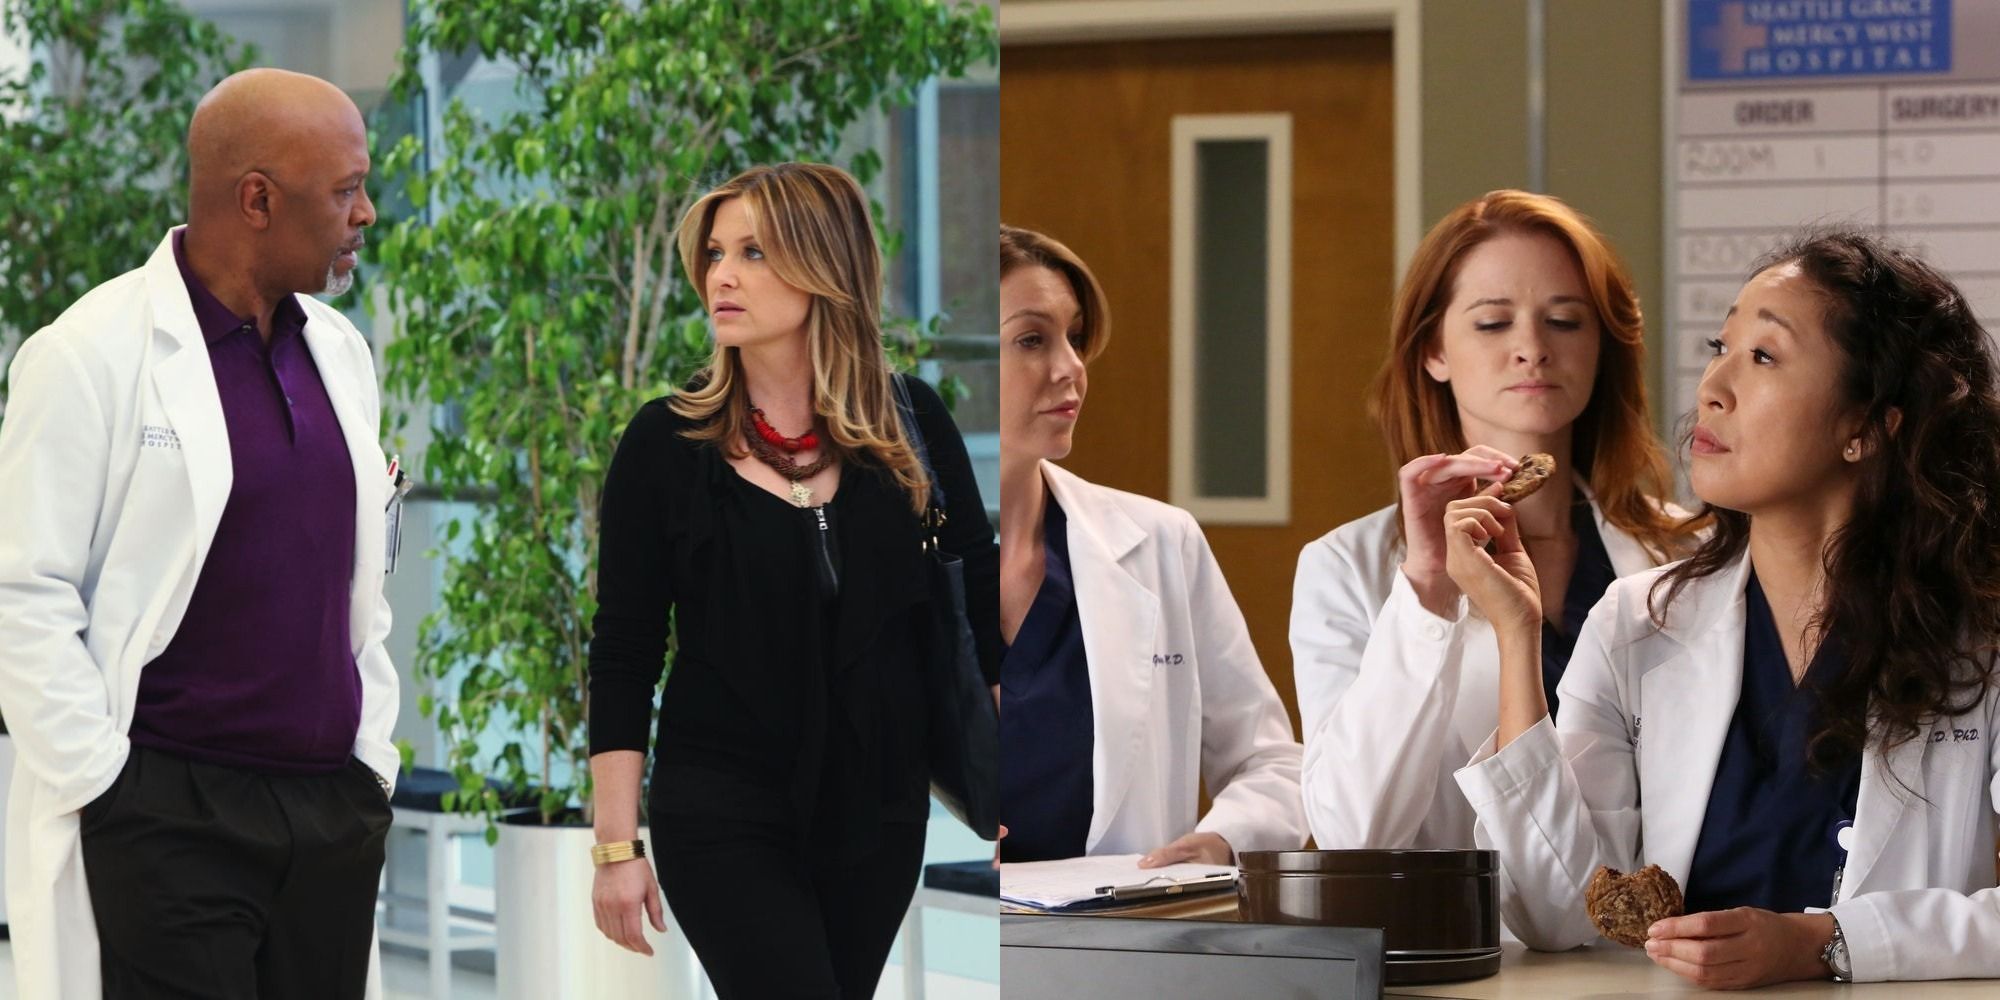 split image - richard and arizona walking in the hospital / Meredith, April and Cristina talking at a nurse's station